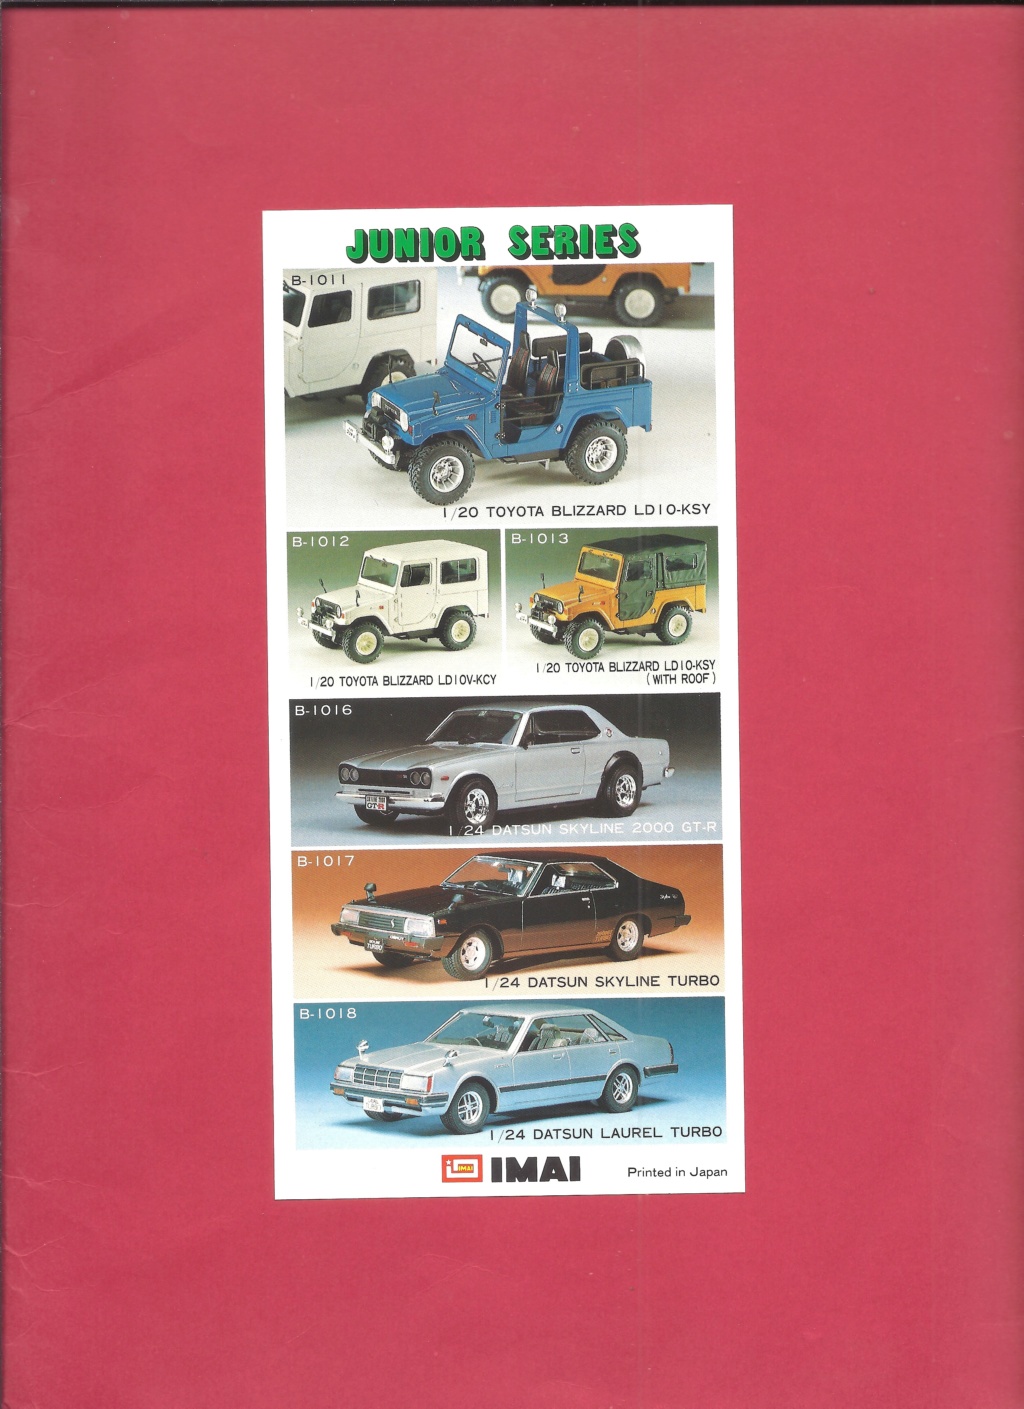 [IMAI 1982] Mini Fiche motos & série junior 1982 Imai_m18